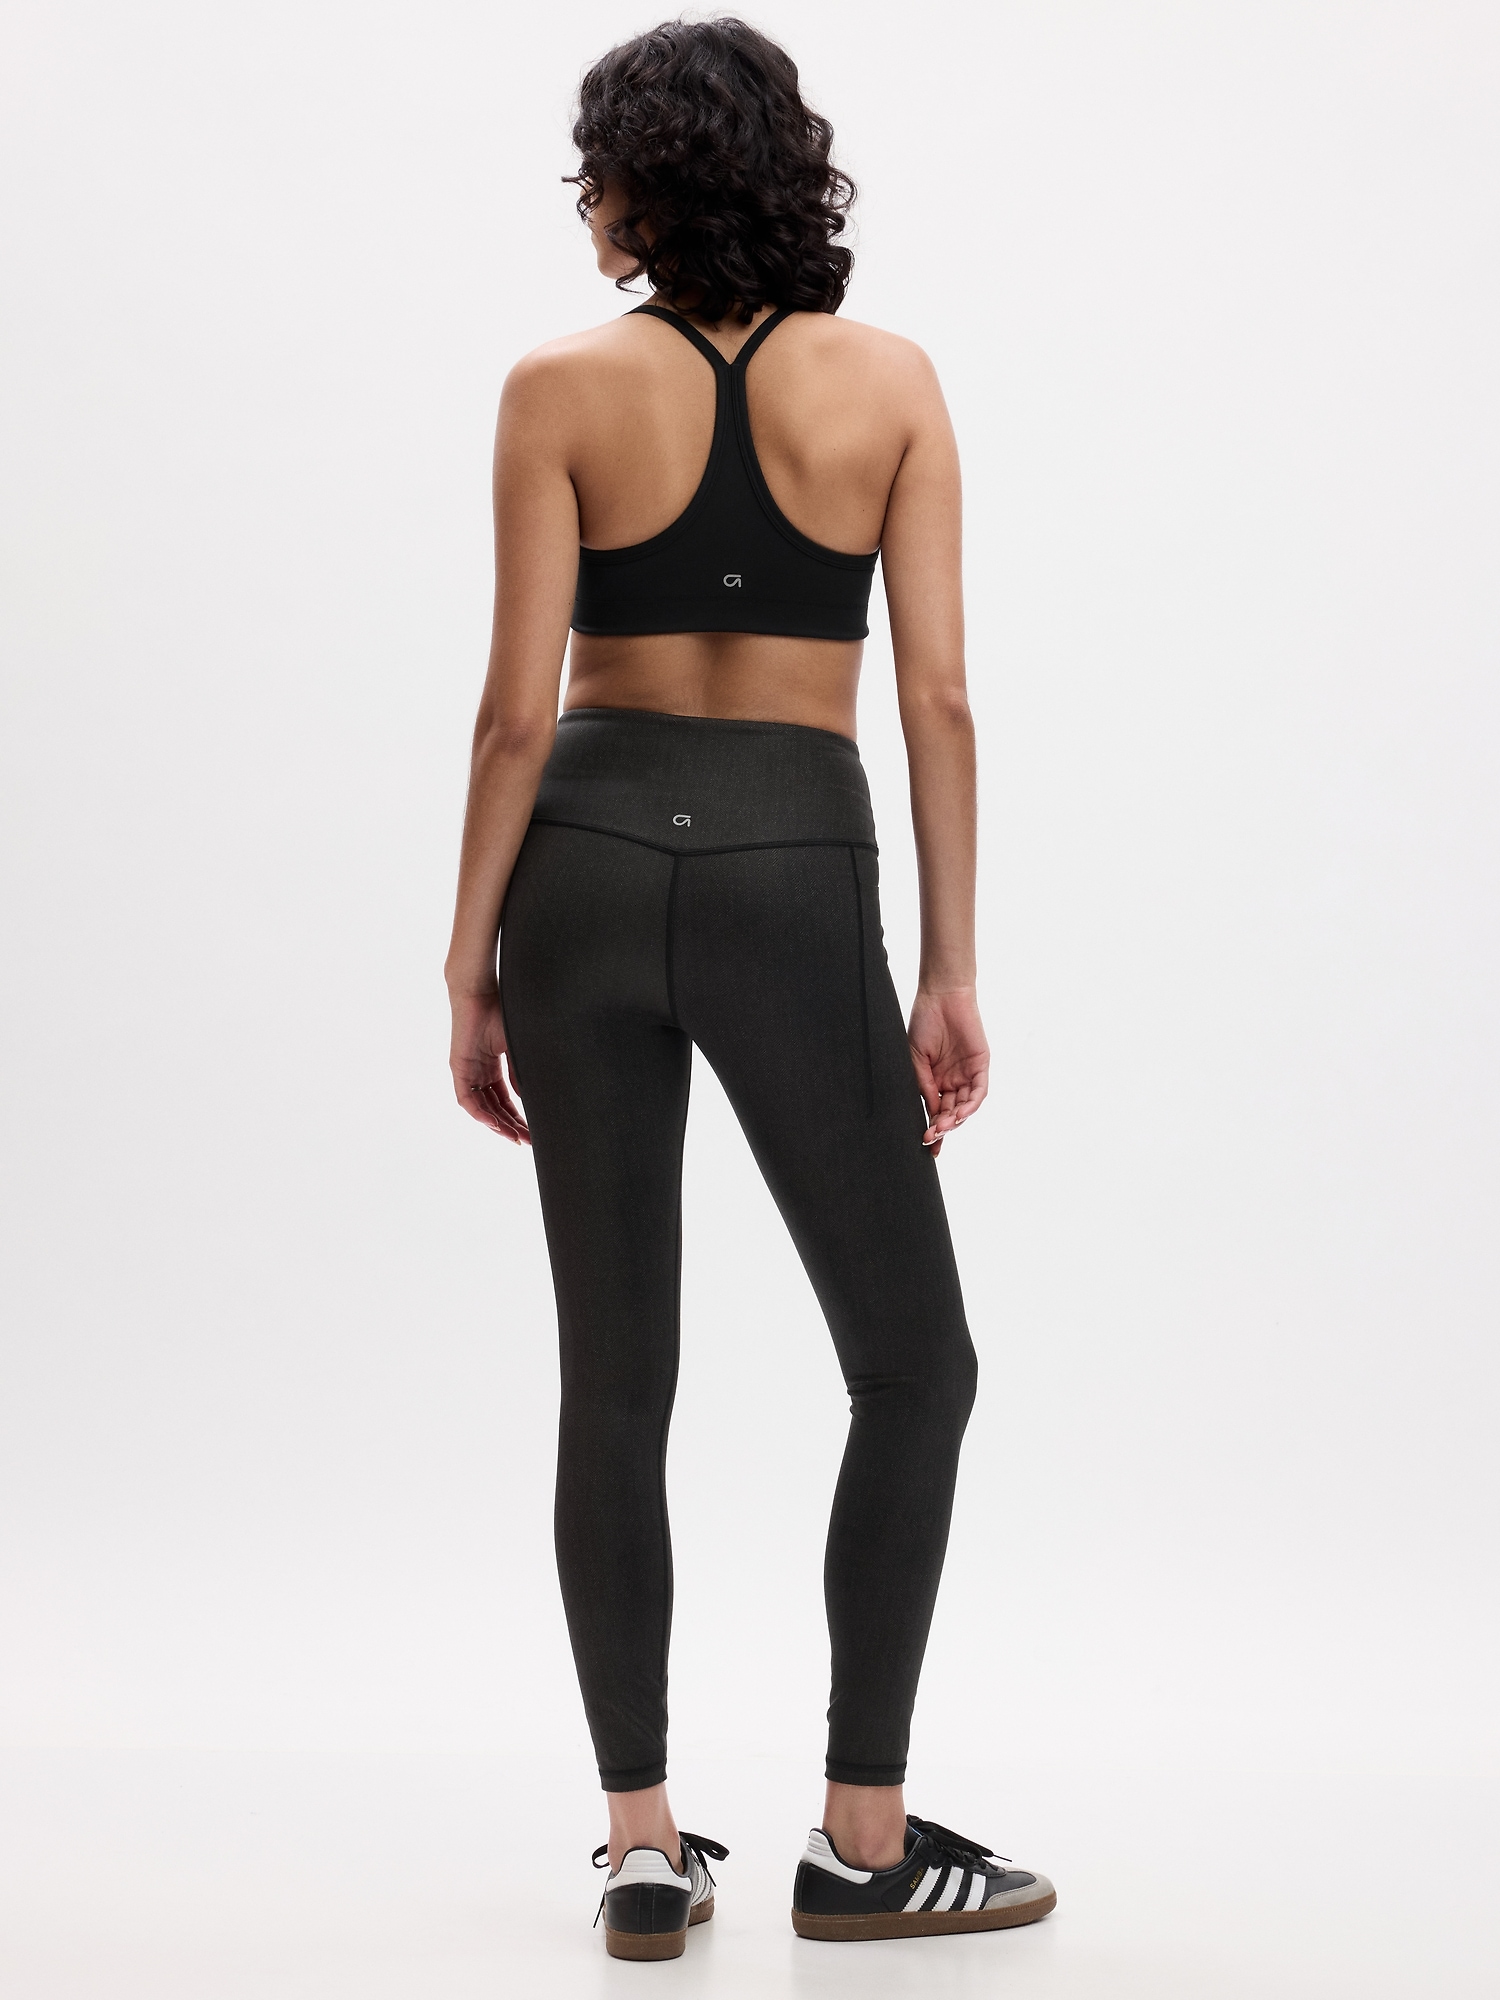 GAP, Intimates & Sleepwear, Gap Fit Recycled Power Black Support Bra Size  Medium